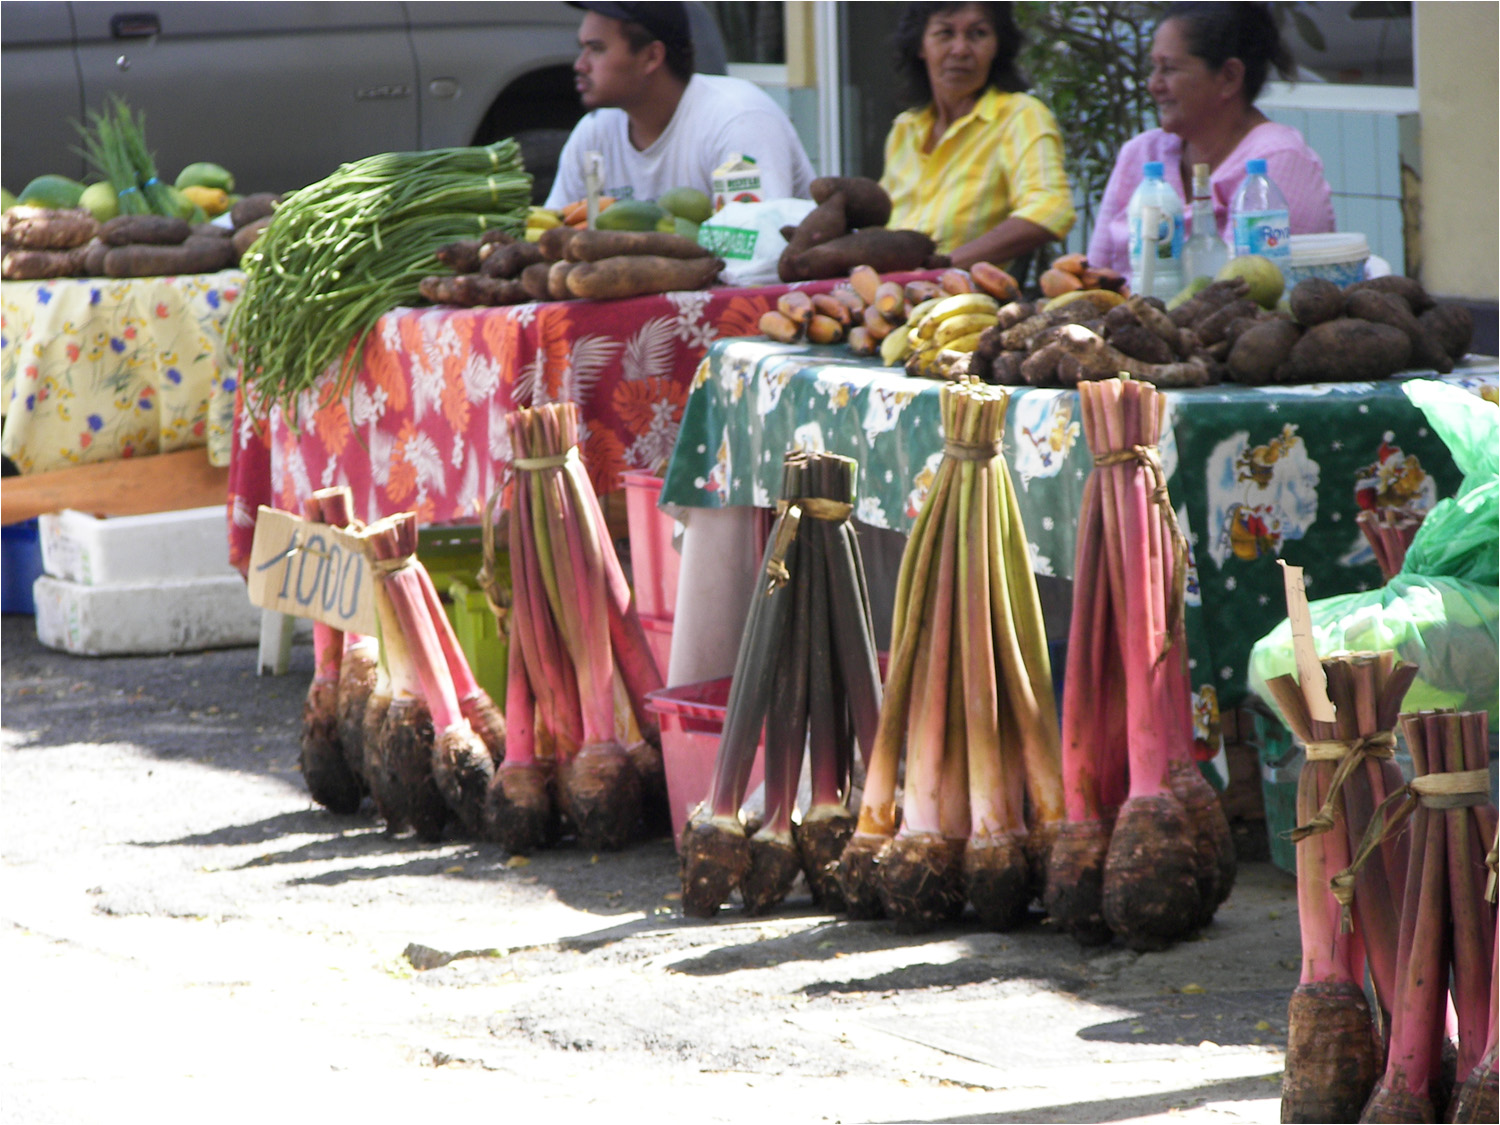 Market in Parea on Huahine Iti.